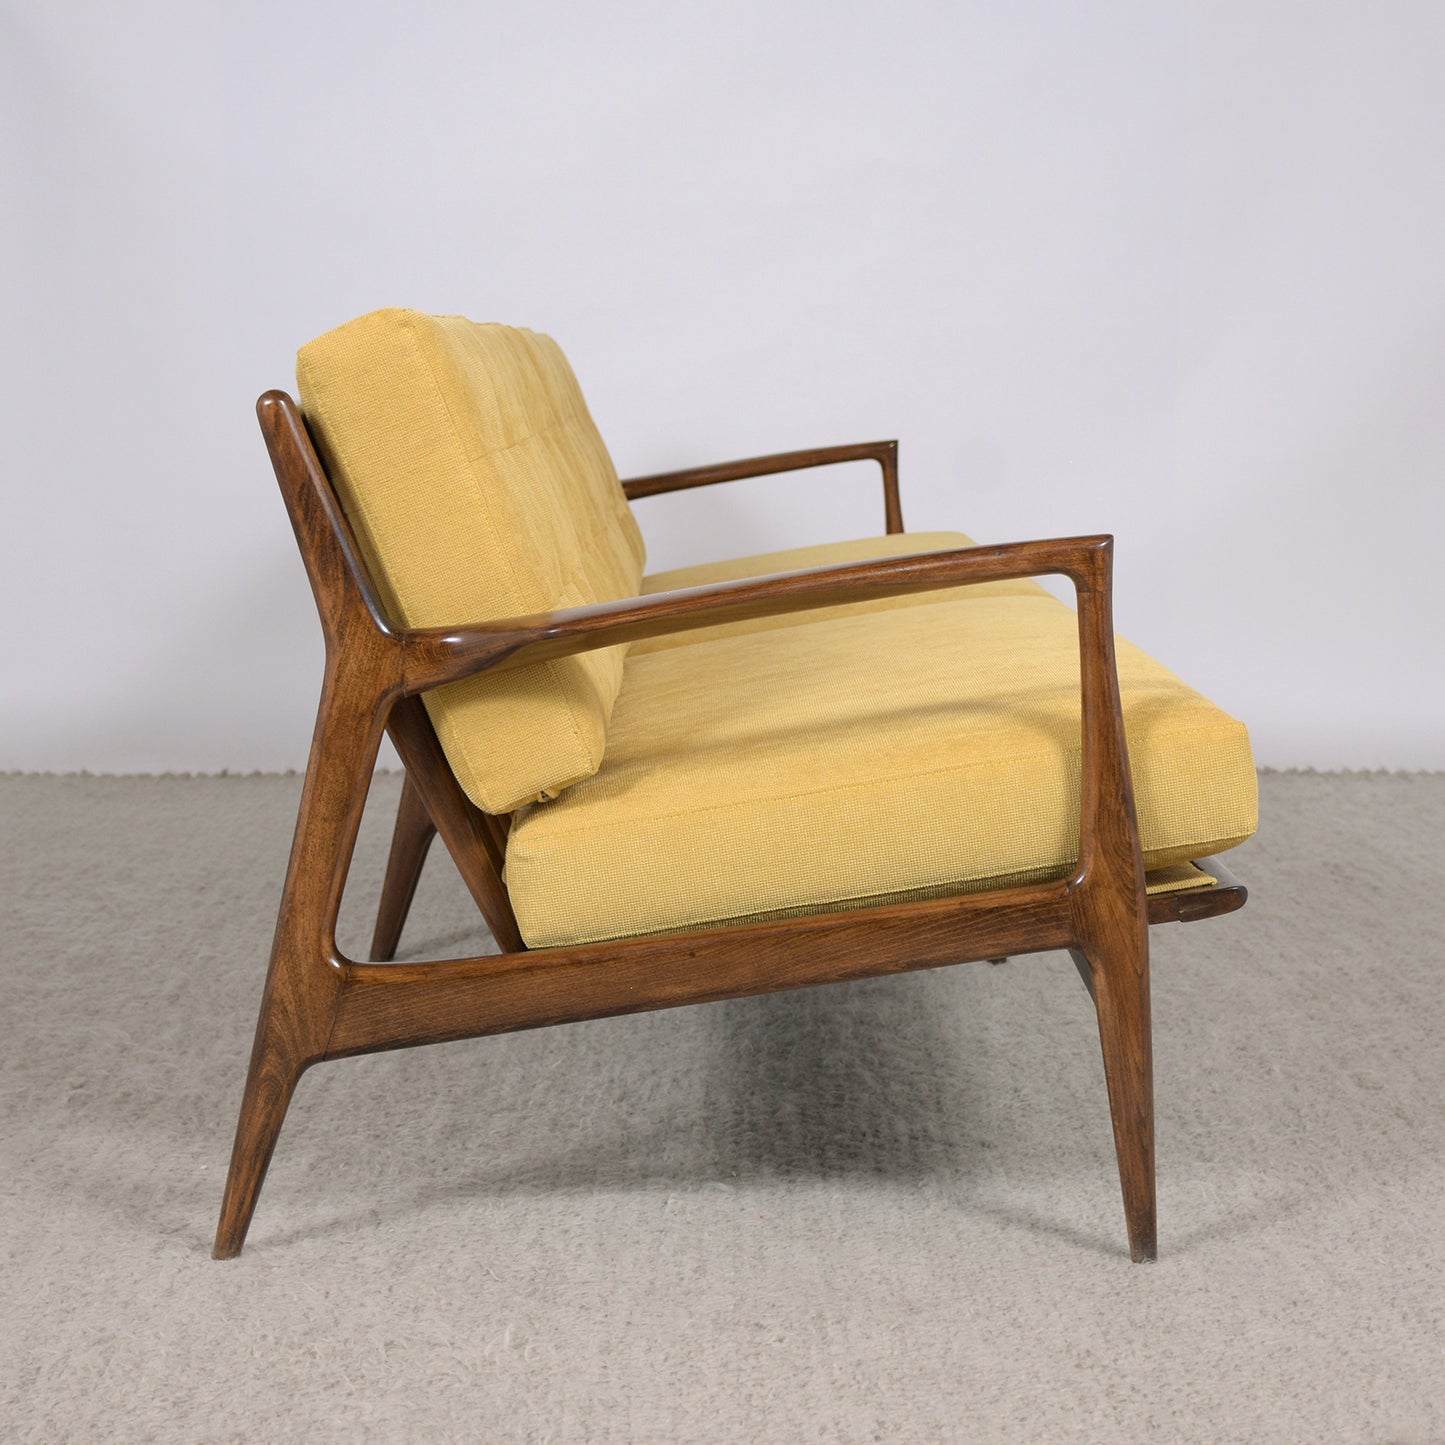 1960s Danish Sectional Sofa: Teak Craftsmanship Meets Mid-Century Elegance